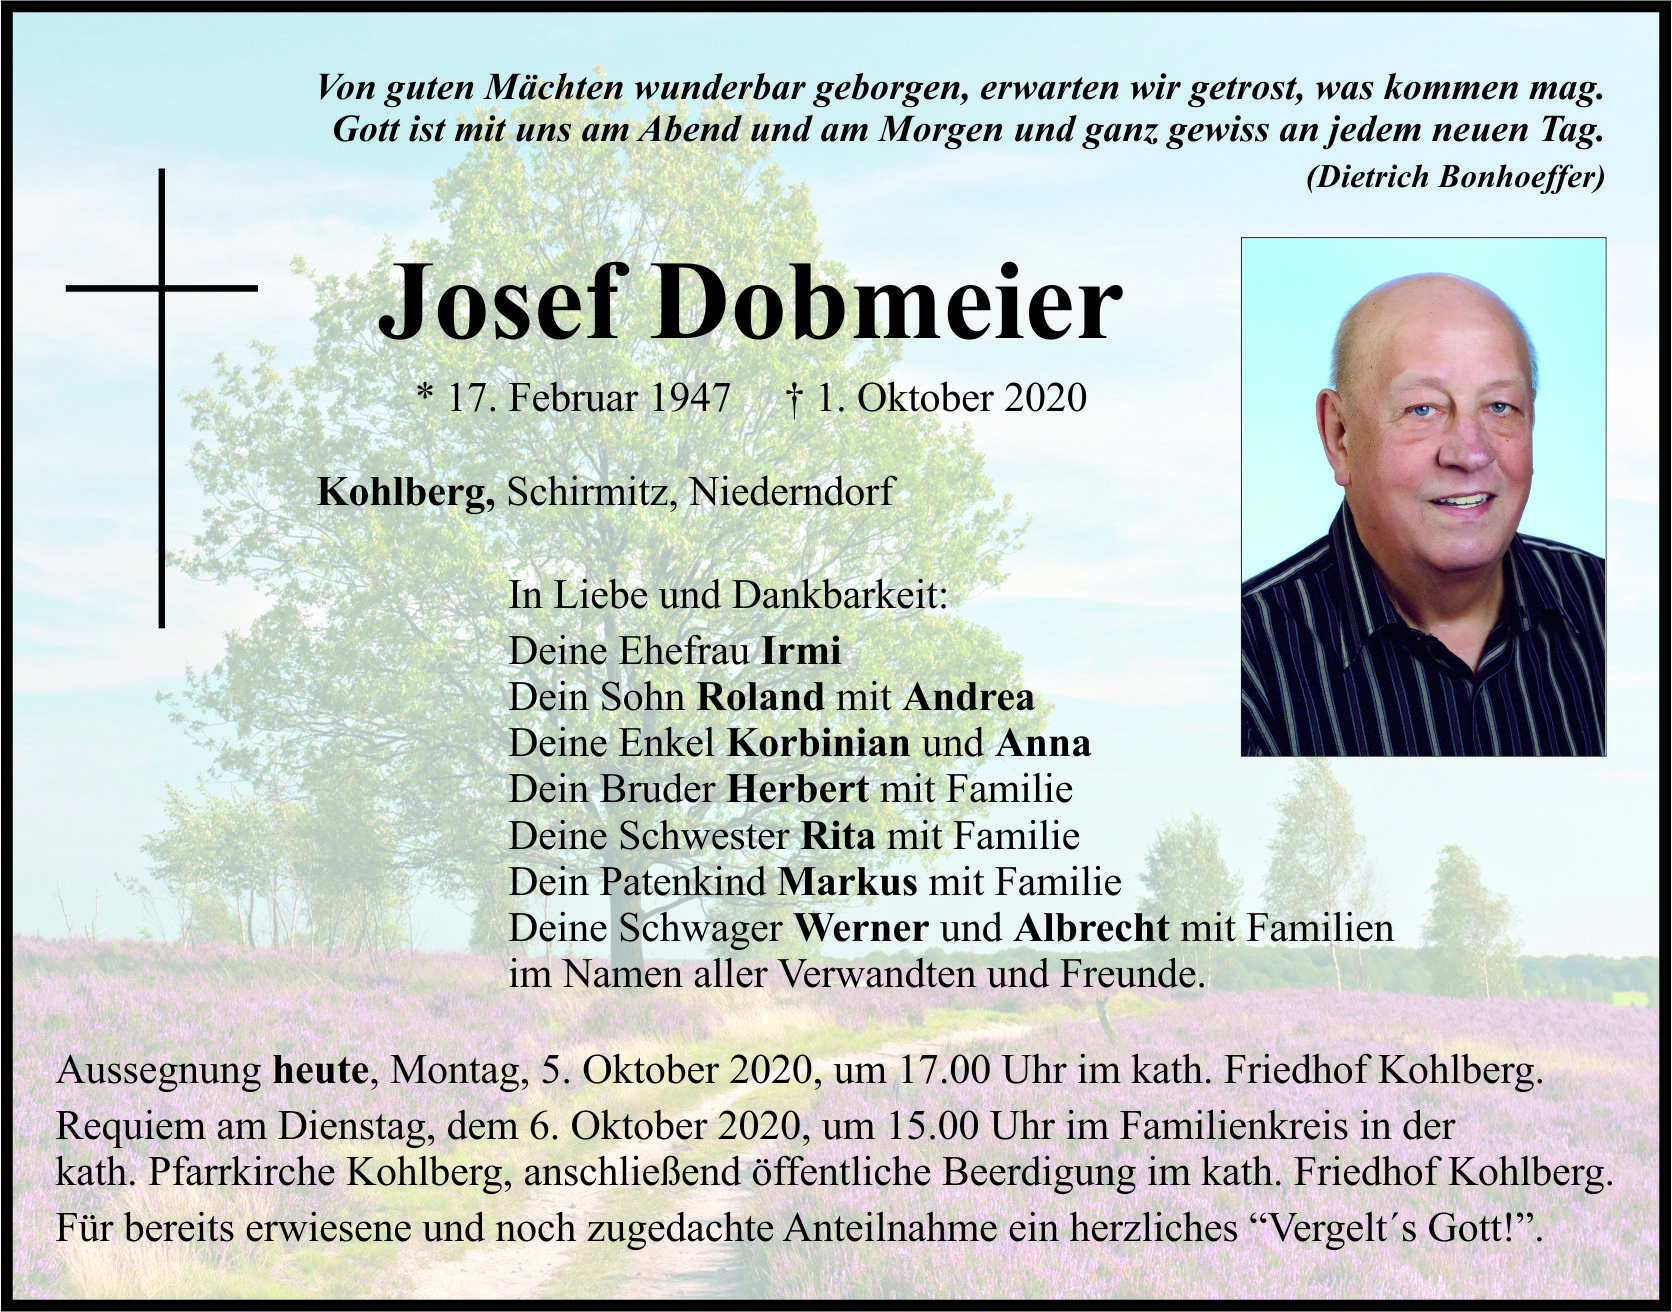 Traueranzeige Josef Dobmeier, Kohlberg